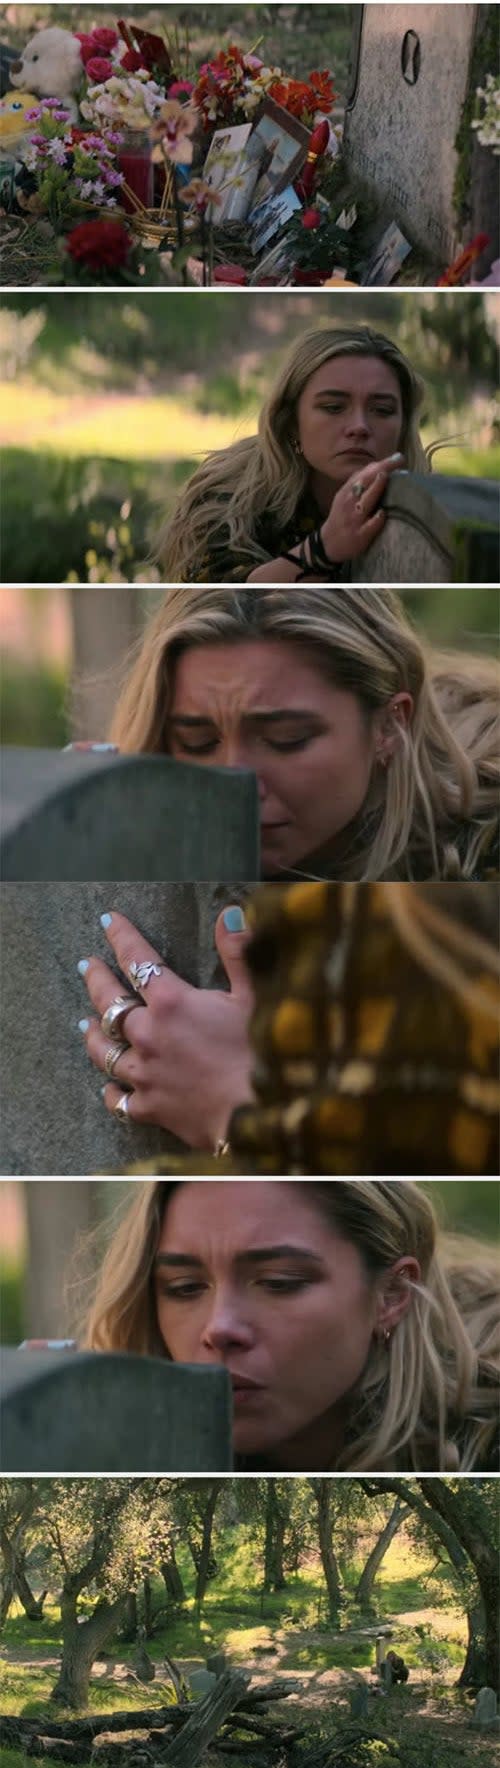 Yelena leaving flowers on Natasha's grave on "Black Widow"